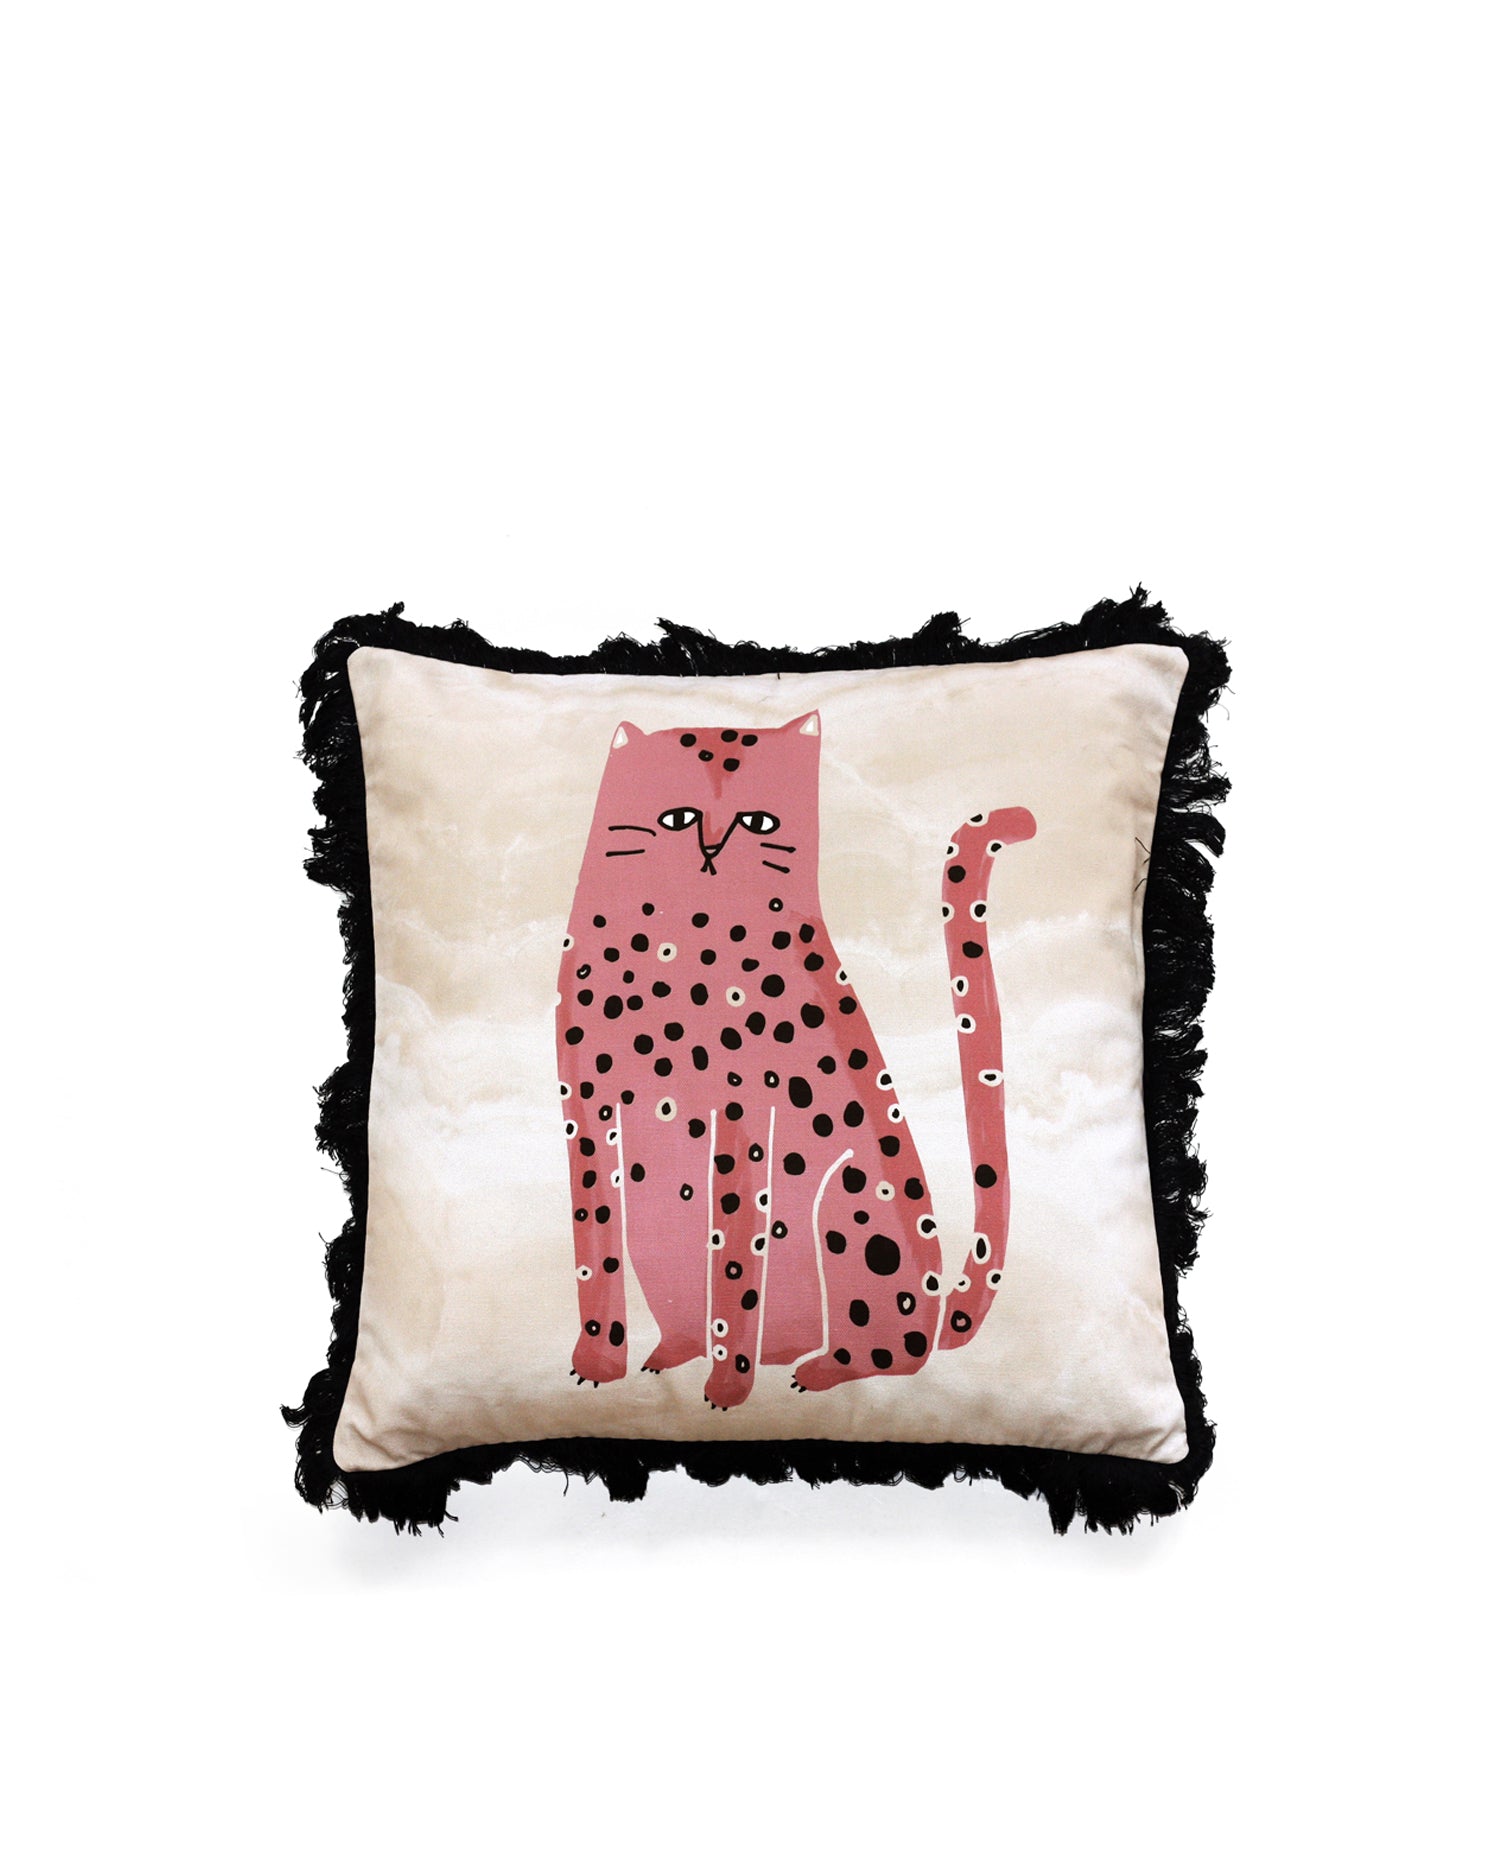 luxury fun printed cat pillow - My Friend Paco